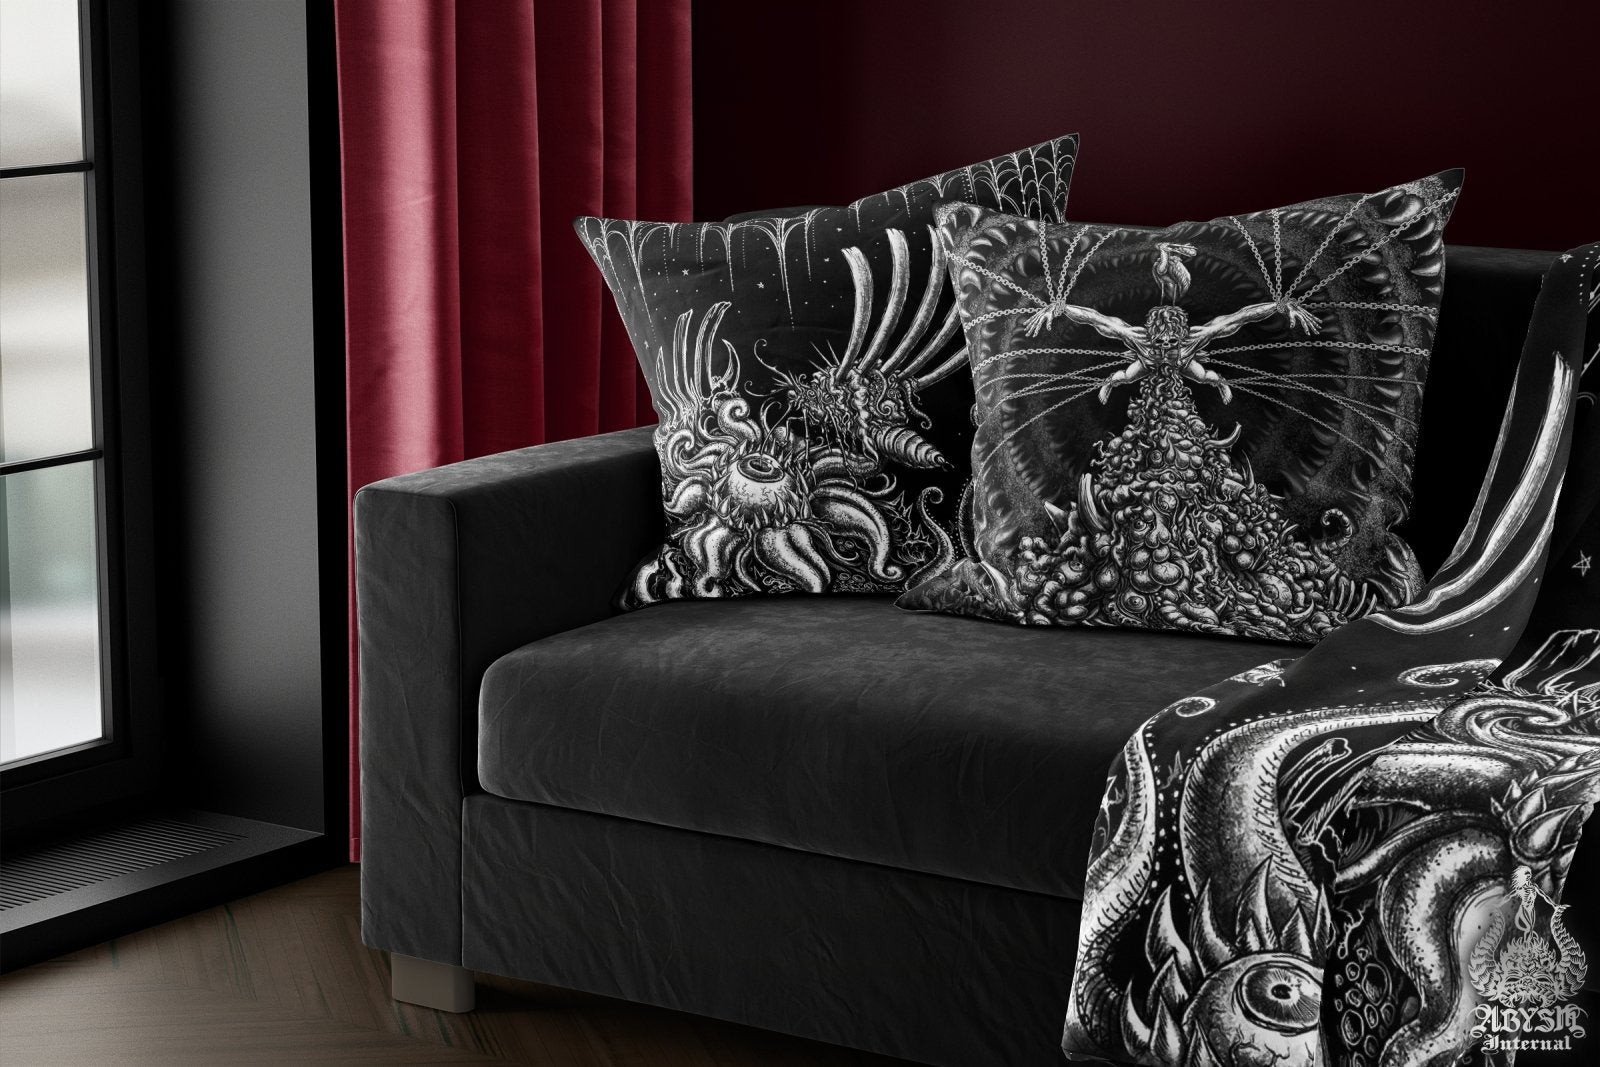 Gothic Throw Pillow, Decorative Accent Cushion, Goth Room Decor, Dark Art, Alternative Home - Bloodfly - Abysm Internal